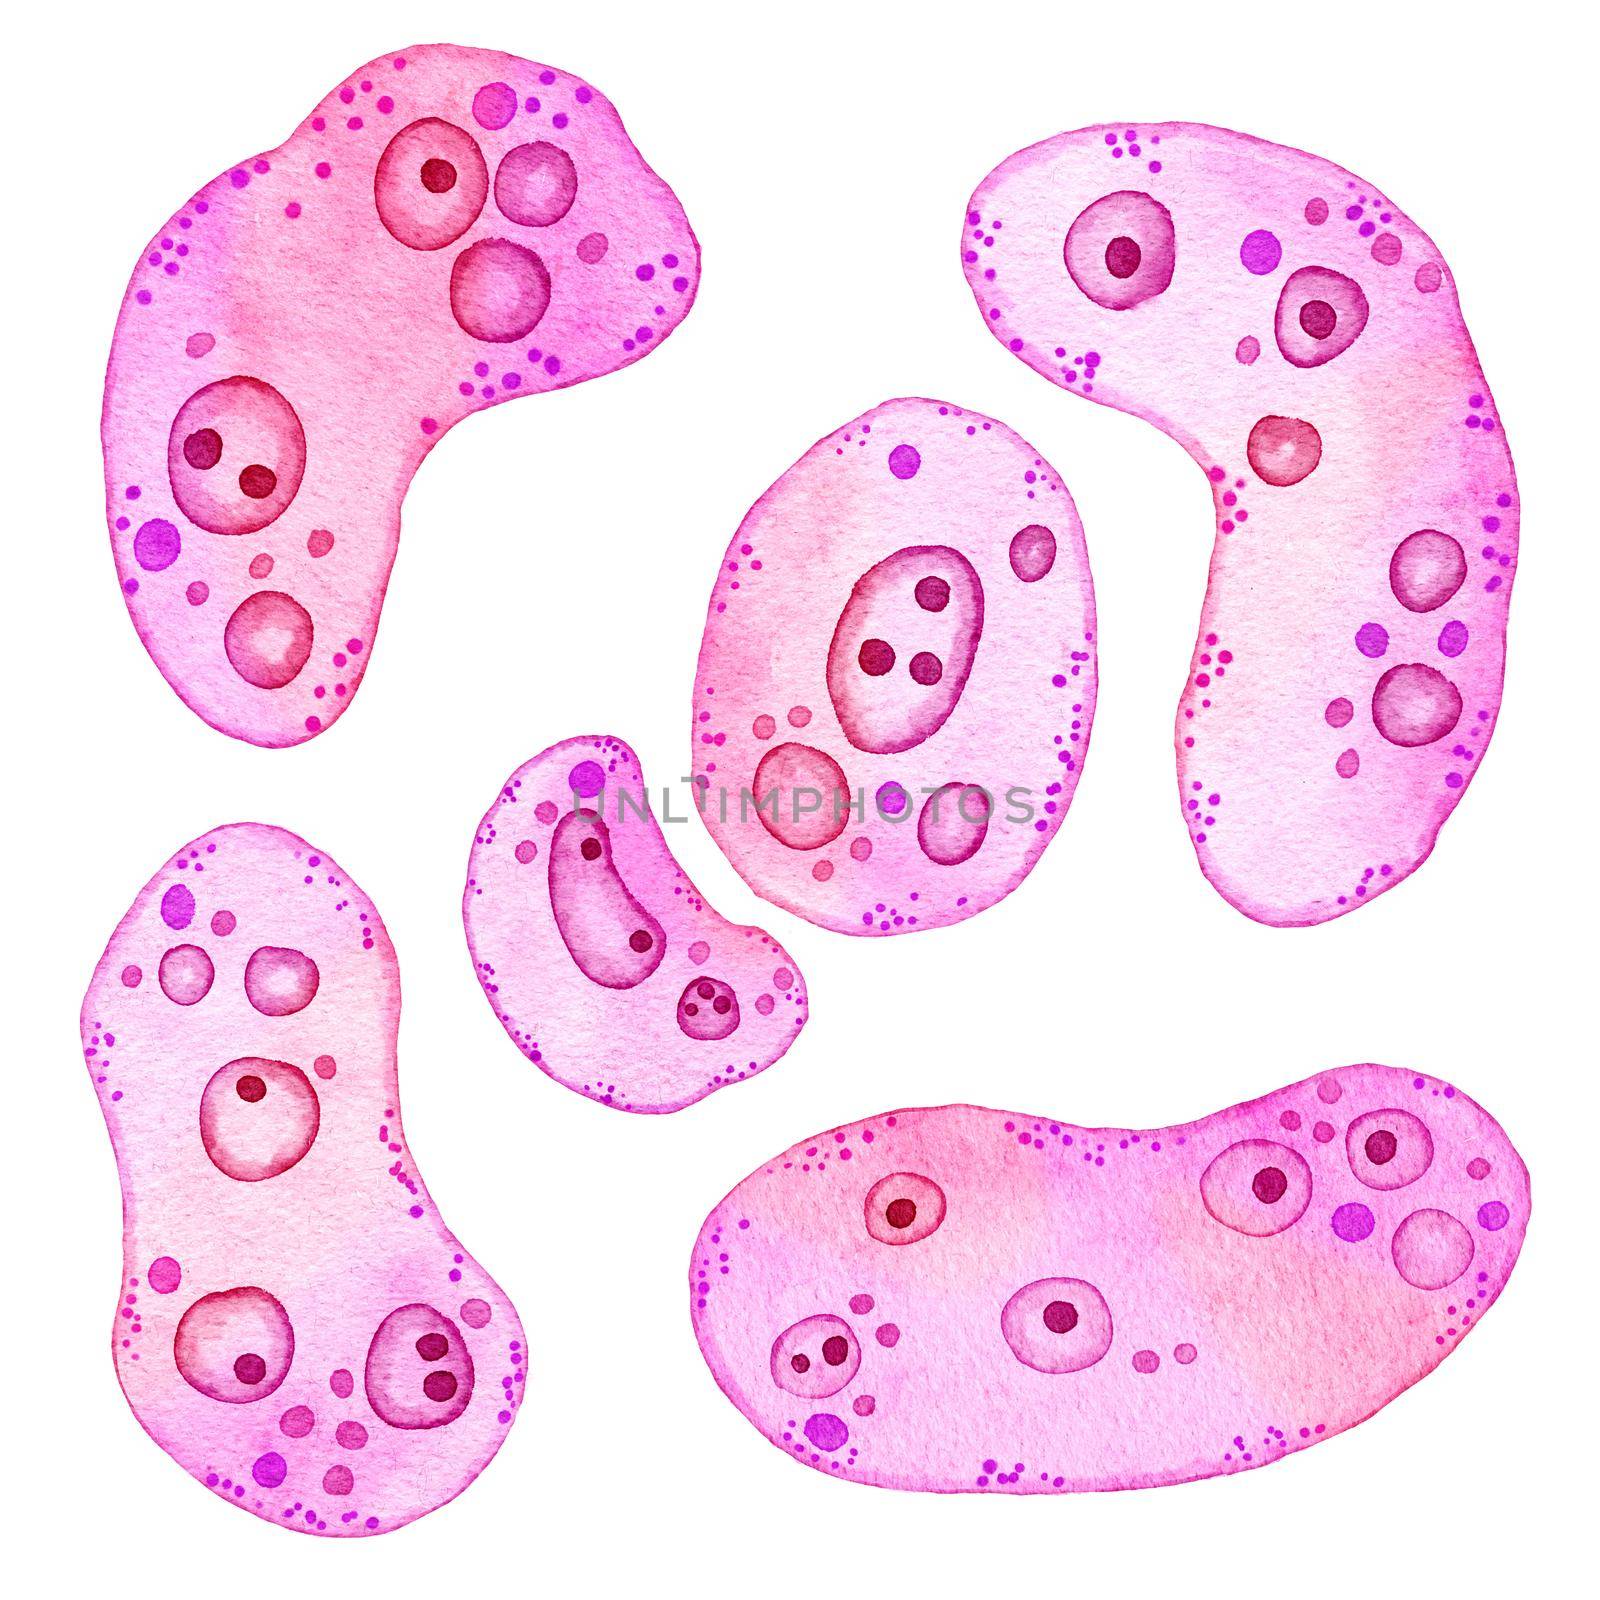 Watercolor illustration of pink purple cells microalgae microorganisms, microscope bio algae. Concept for cosmetics medicine healthcare print design. Pastel ameoba bacteria, soft oval round shape. by Lagmar